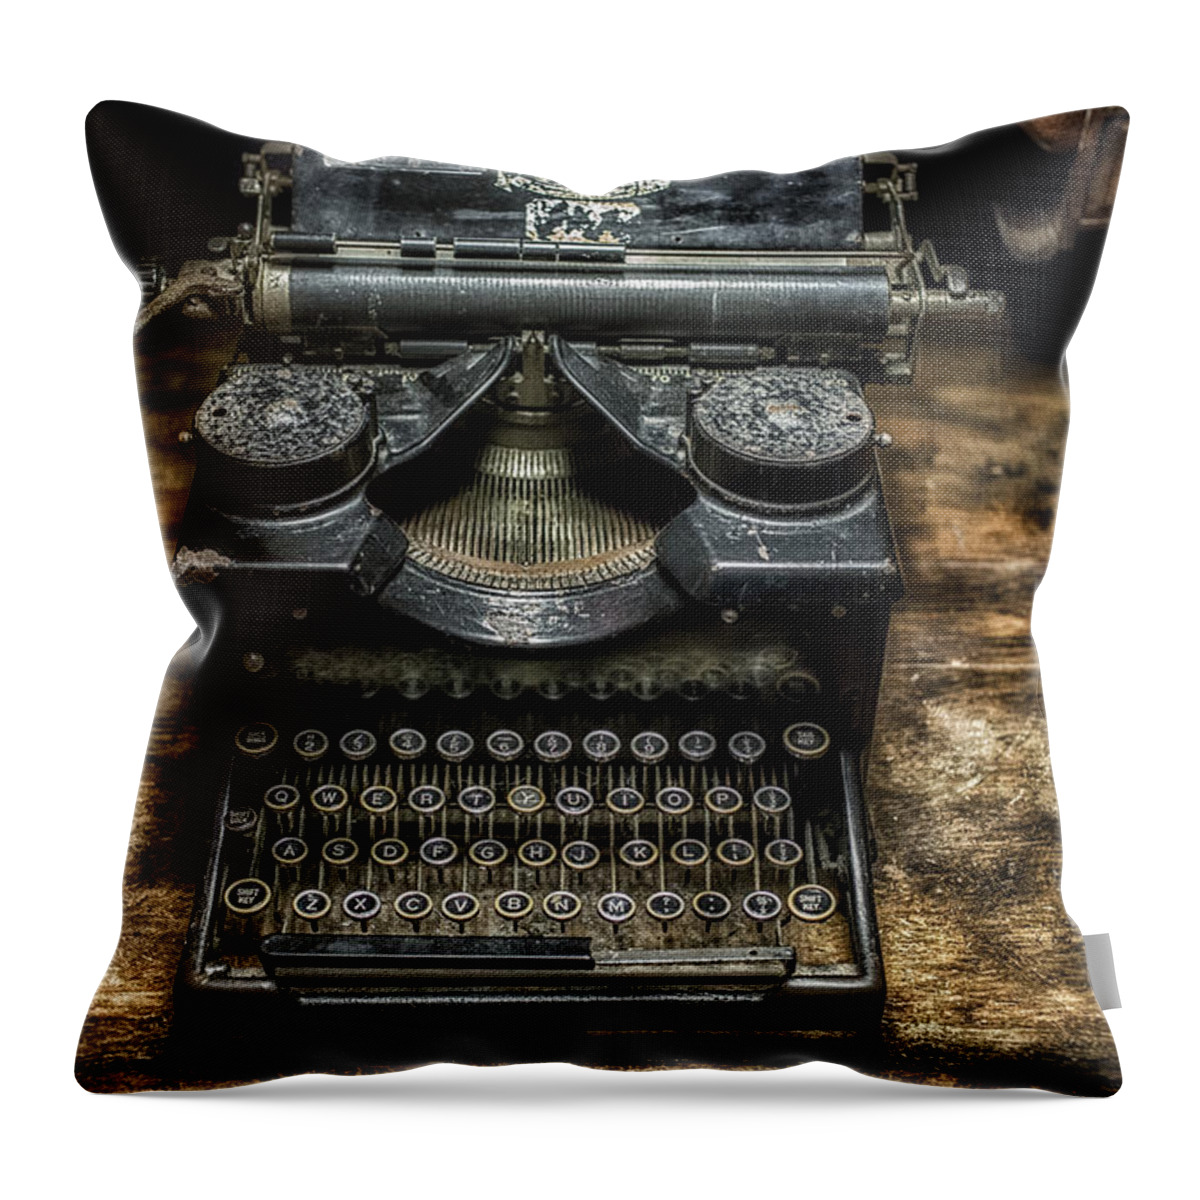 Typewriter Throw Pillow featuring the photograph Royal Typewriter by Nigel R Bell